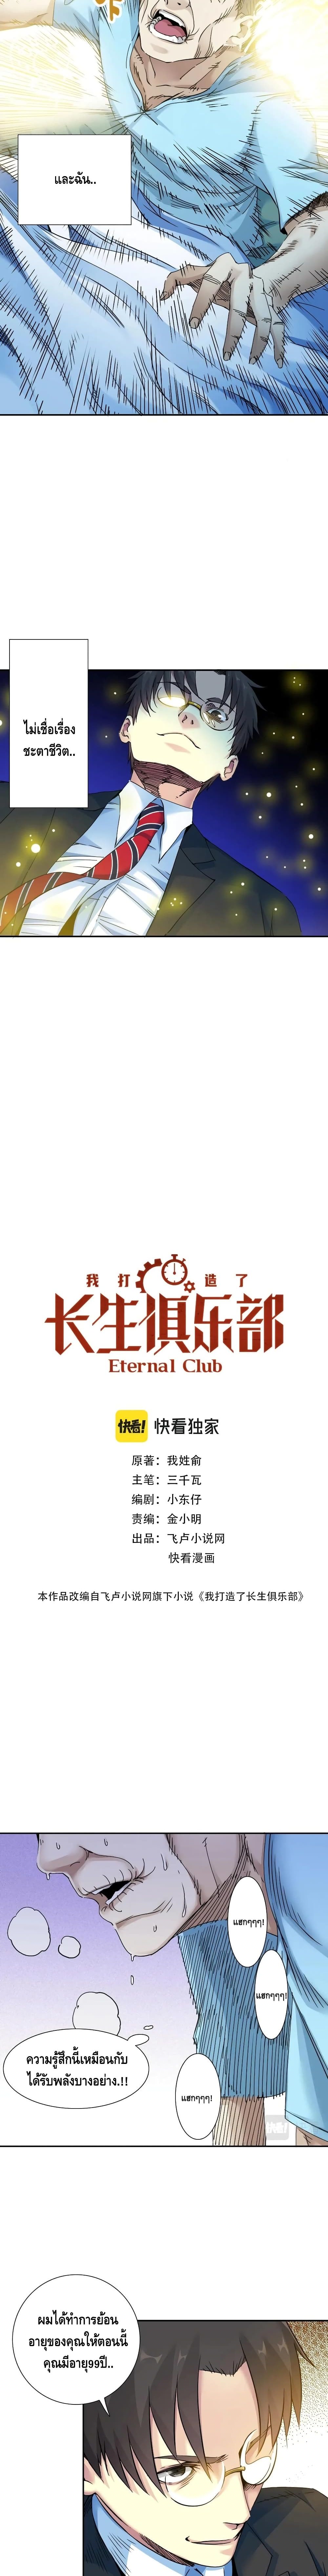 The Eternal Club